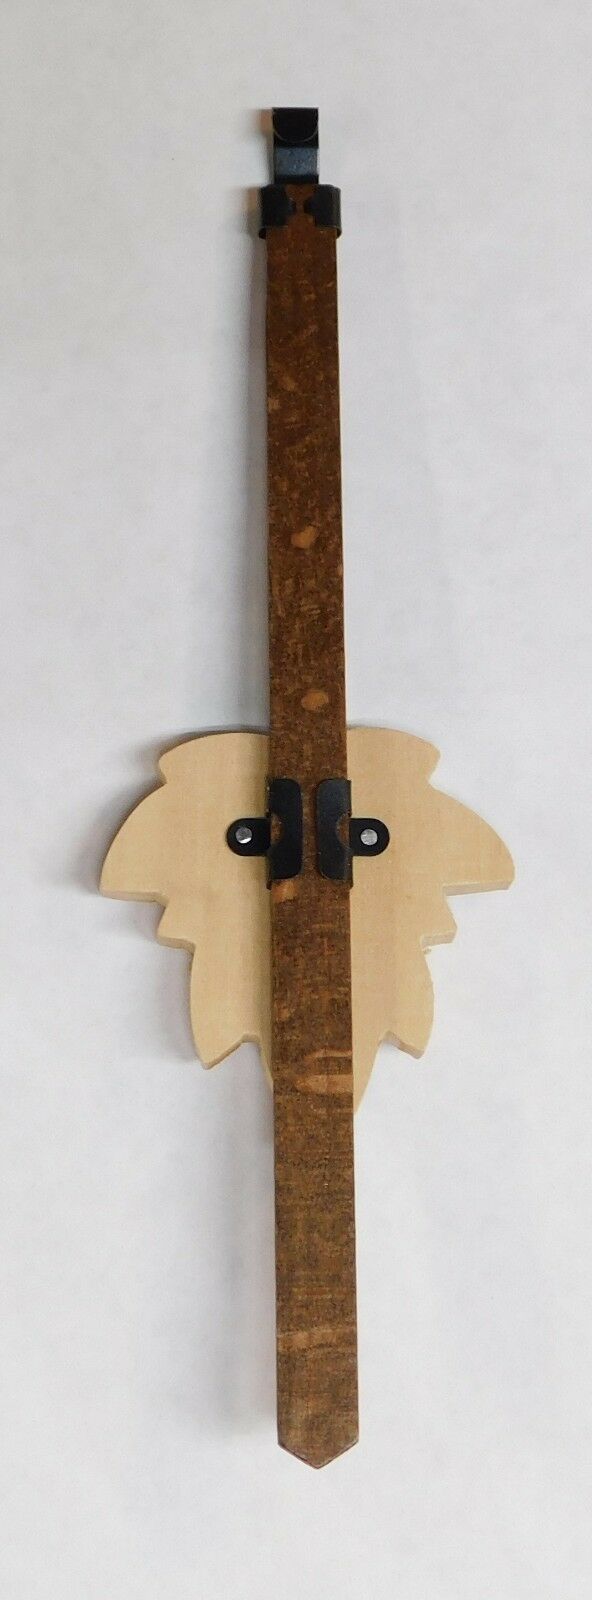 High-Quality Maple Leaf Cuckoo Clock Pendulum for 1-Day Clocks with Timekeeping Adjustment - 2" x 7 1/4"